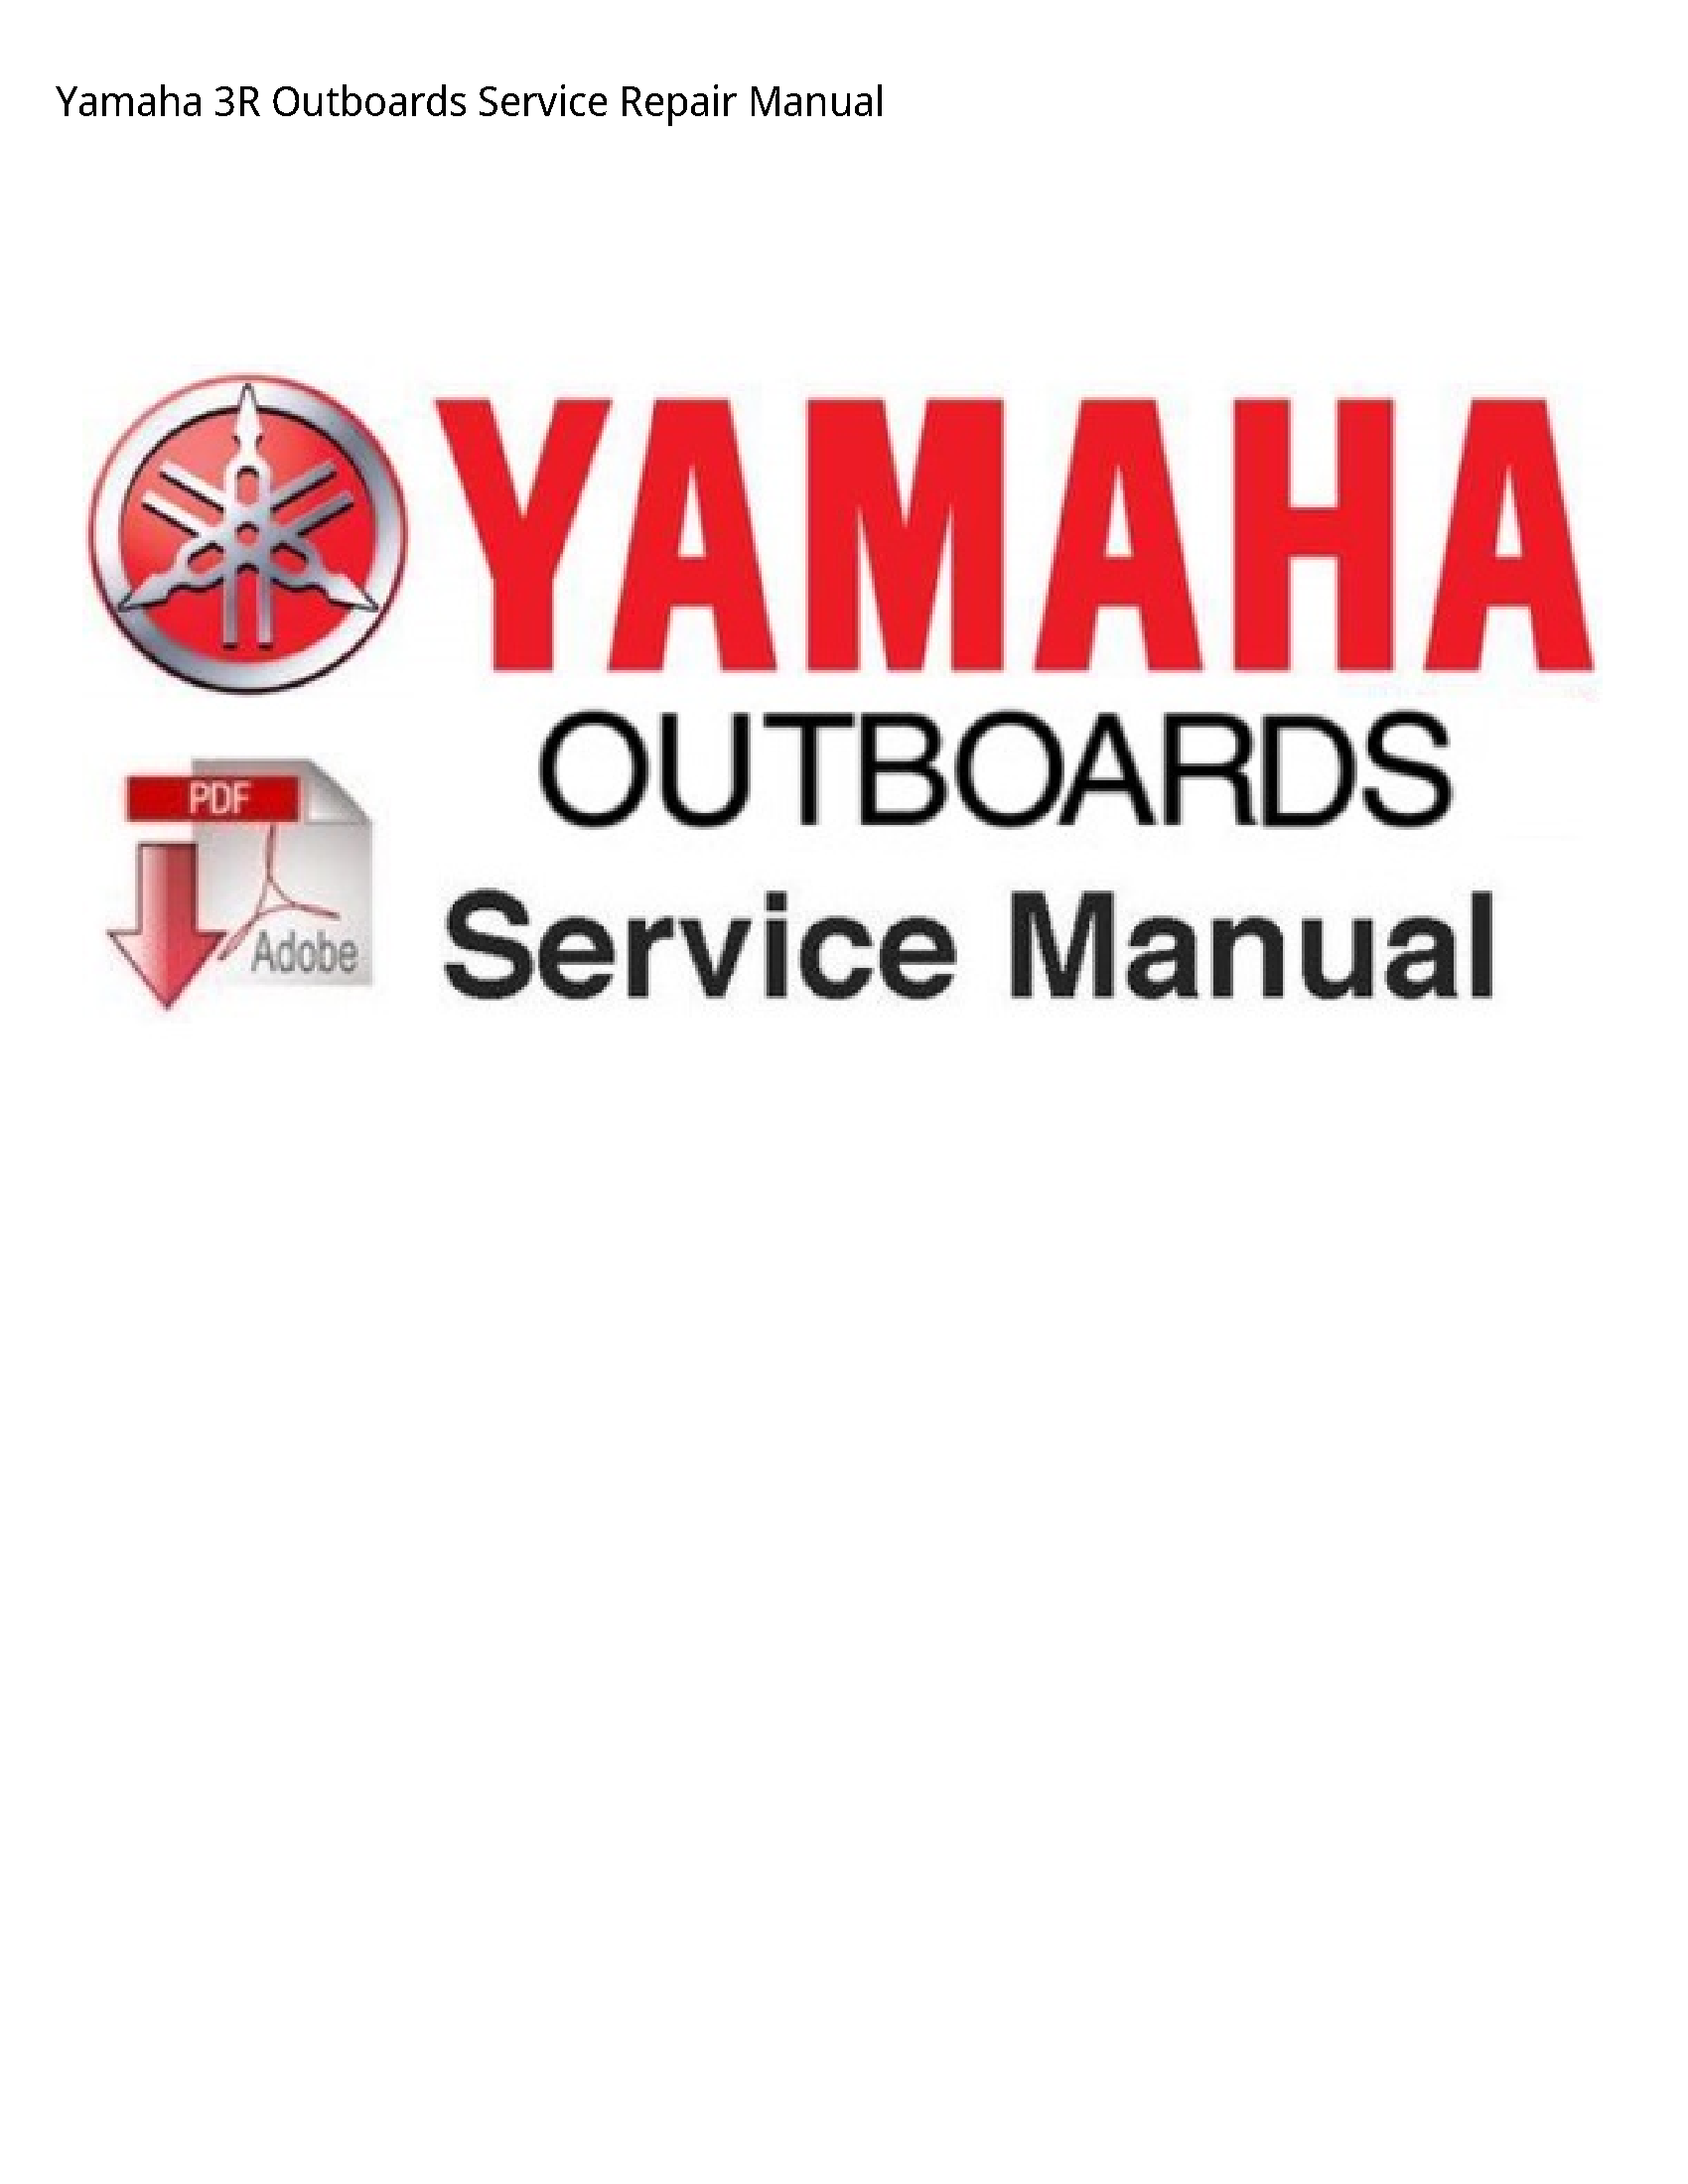 Yamaha 3R Outboards manual